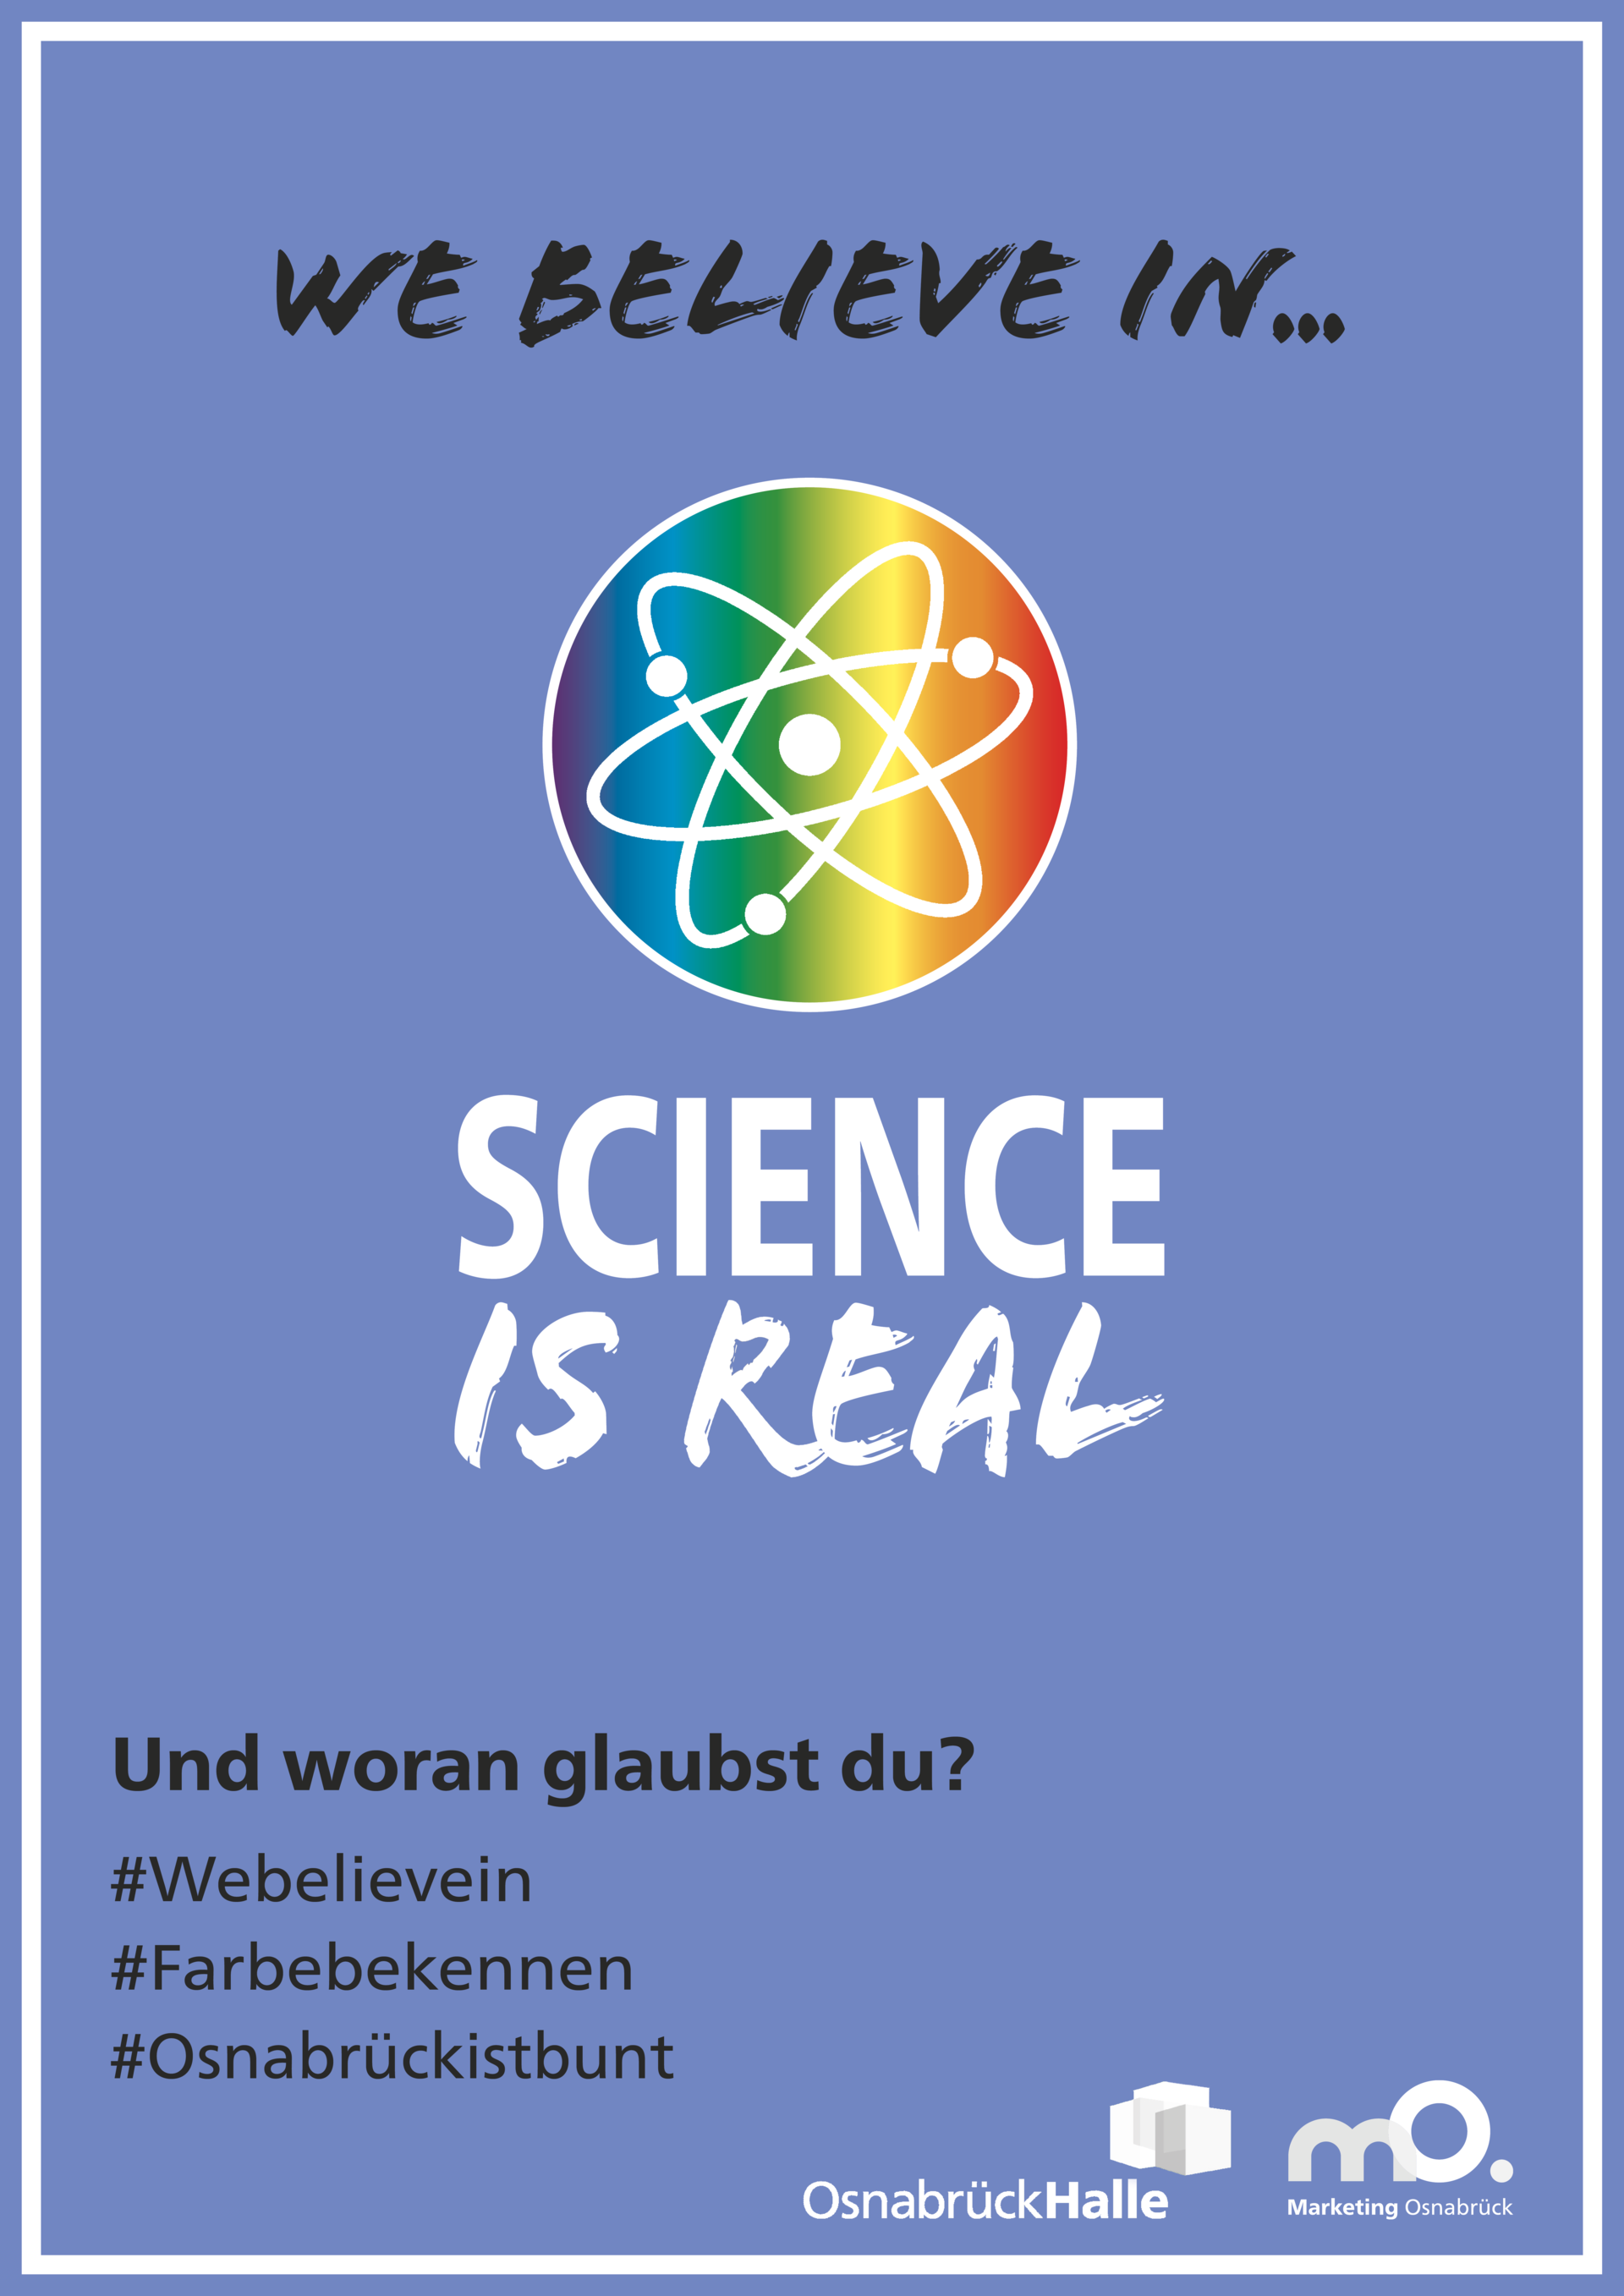 We believe in Science is Real